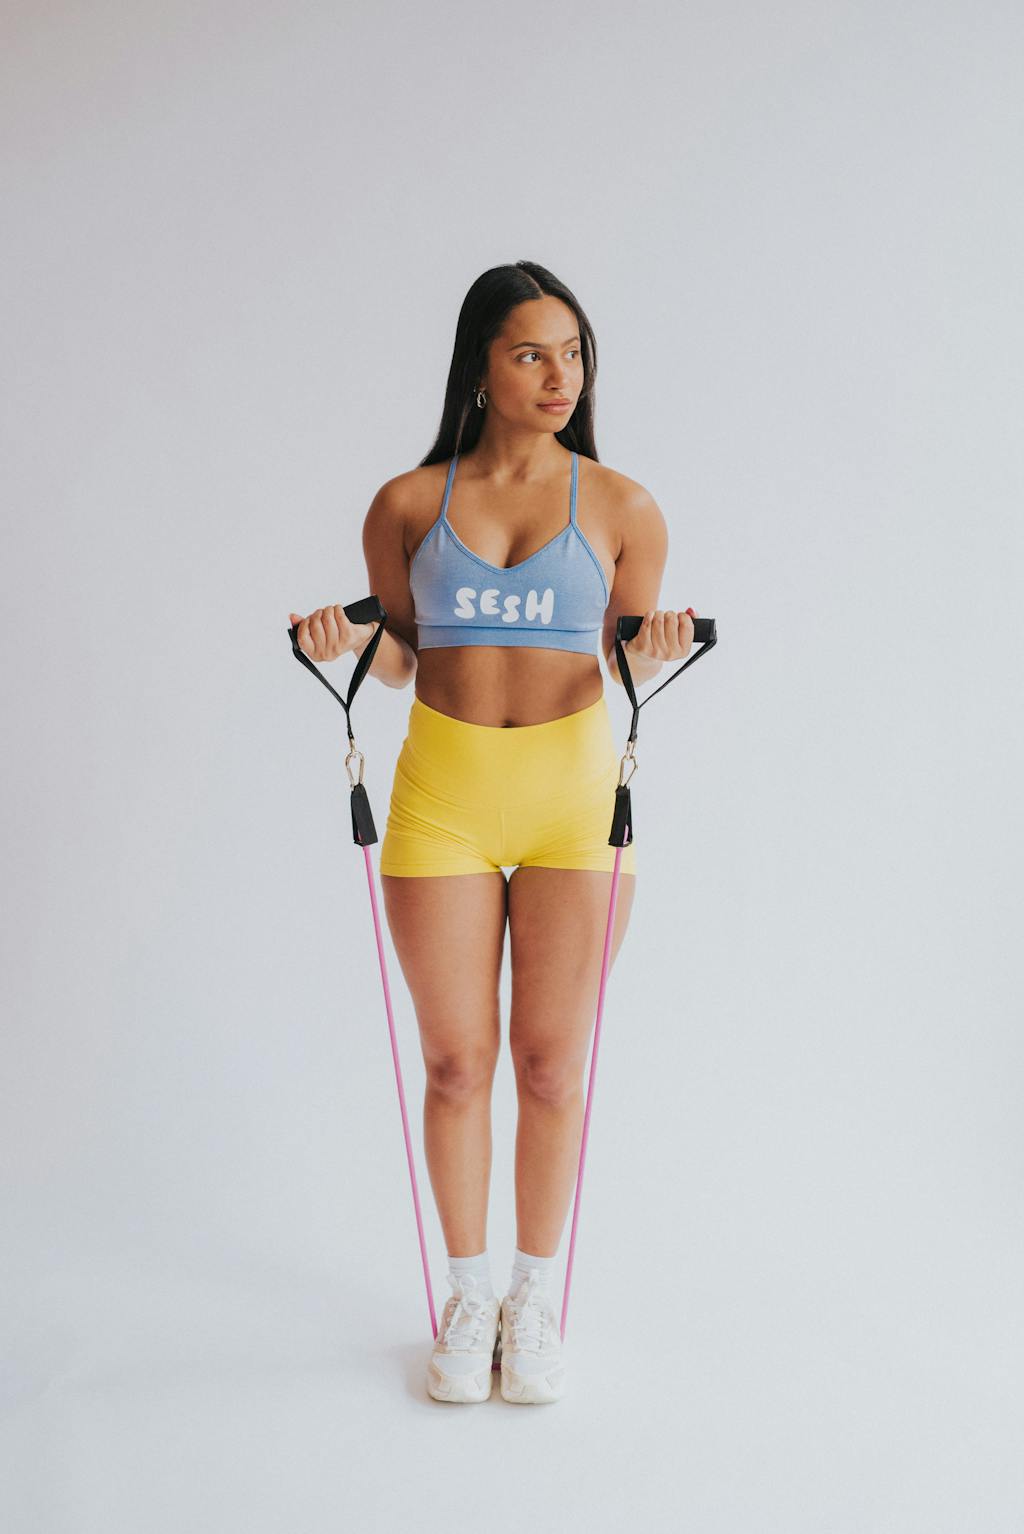 Sesh Fitness Resistance Band Kit